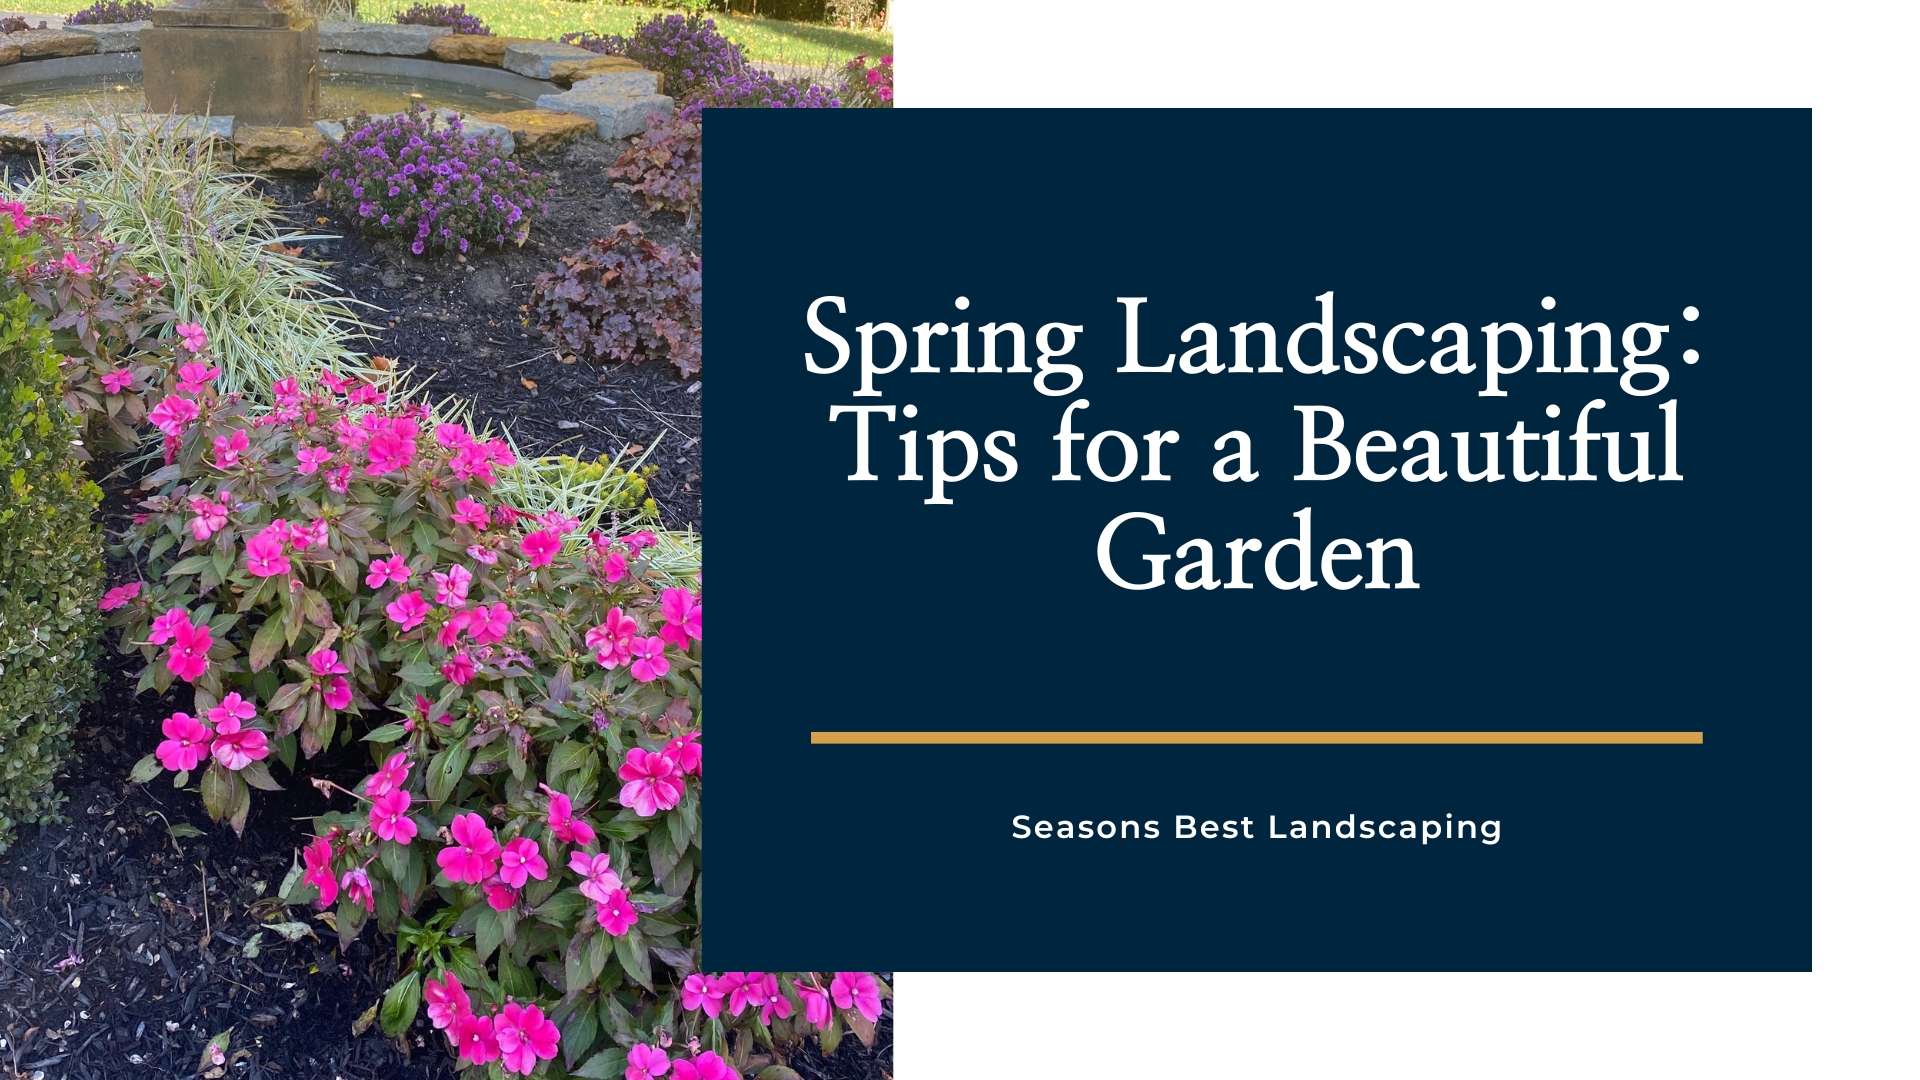 Spring Garden Landscaping Seasons Best Landscaping Blog Image